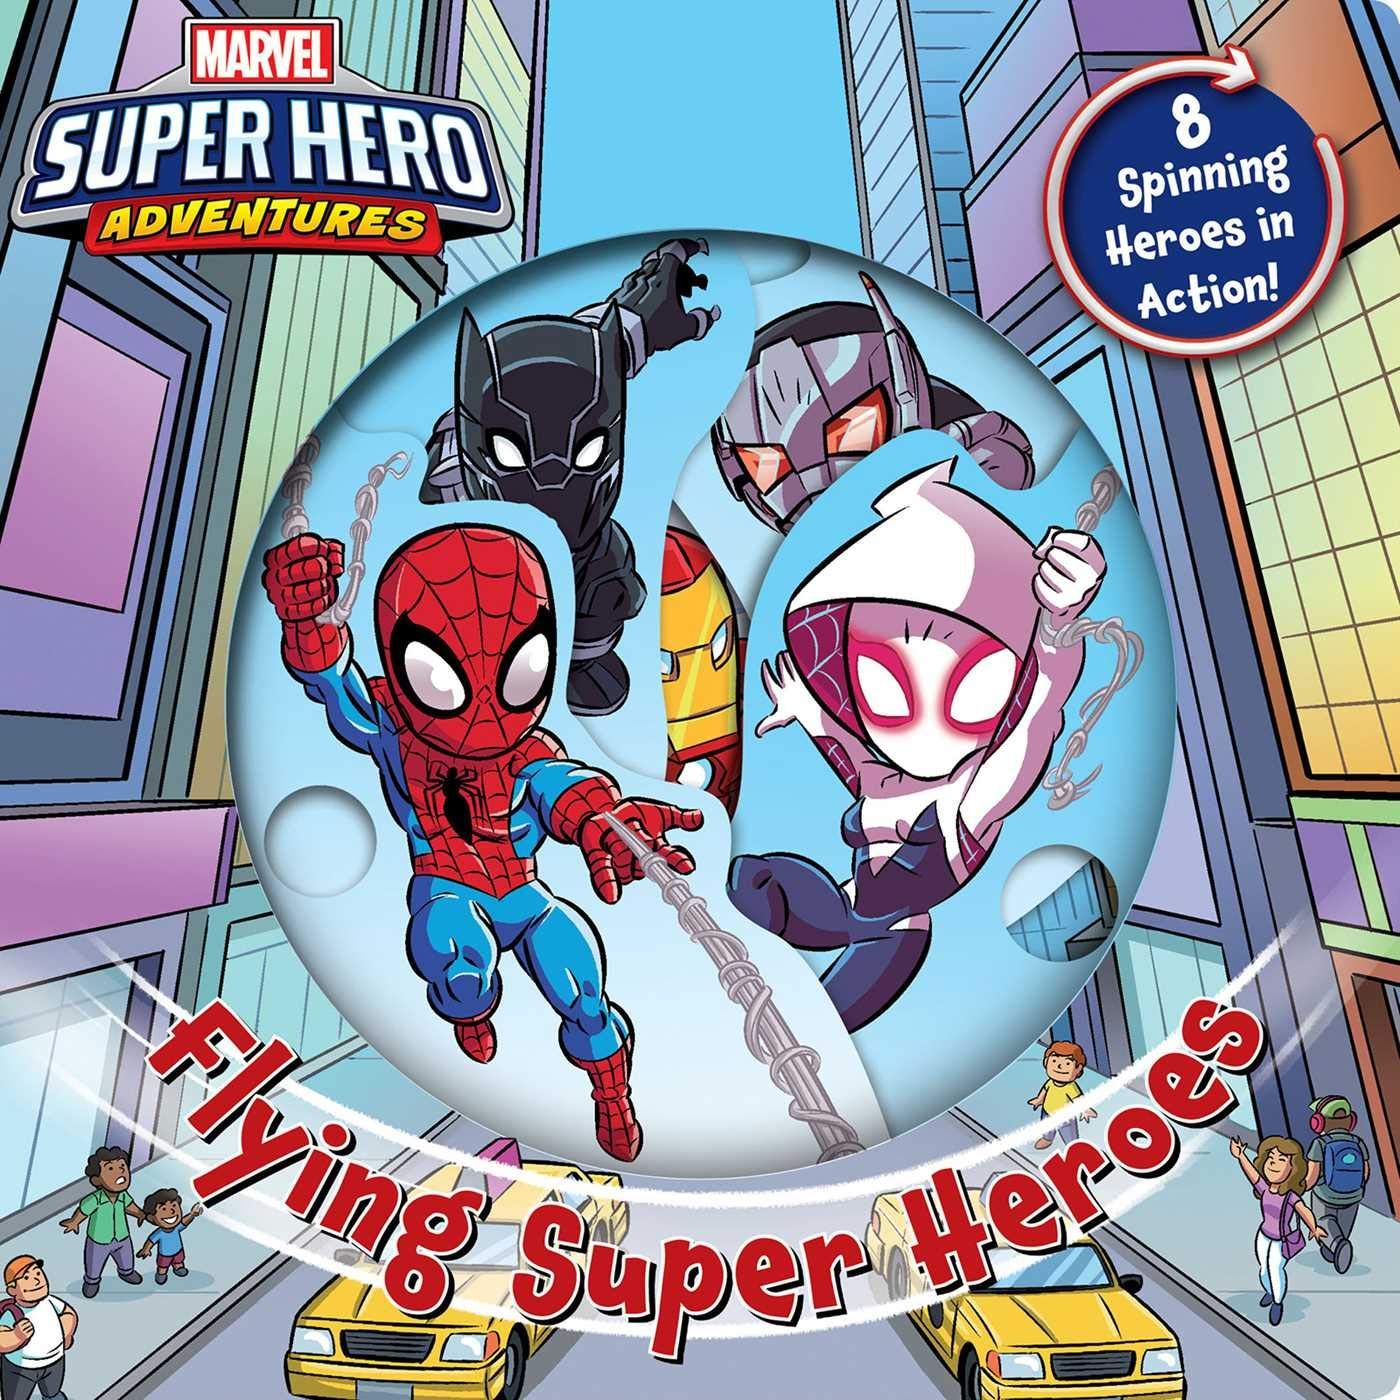 Marvel Flying Superheroes cover